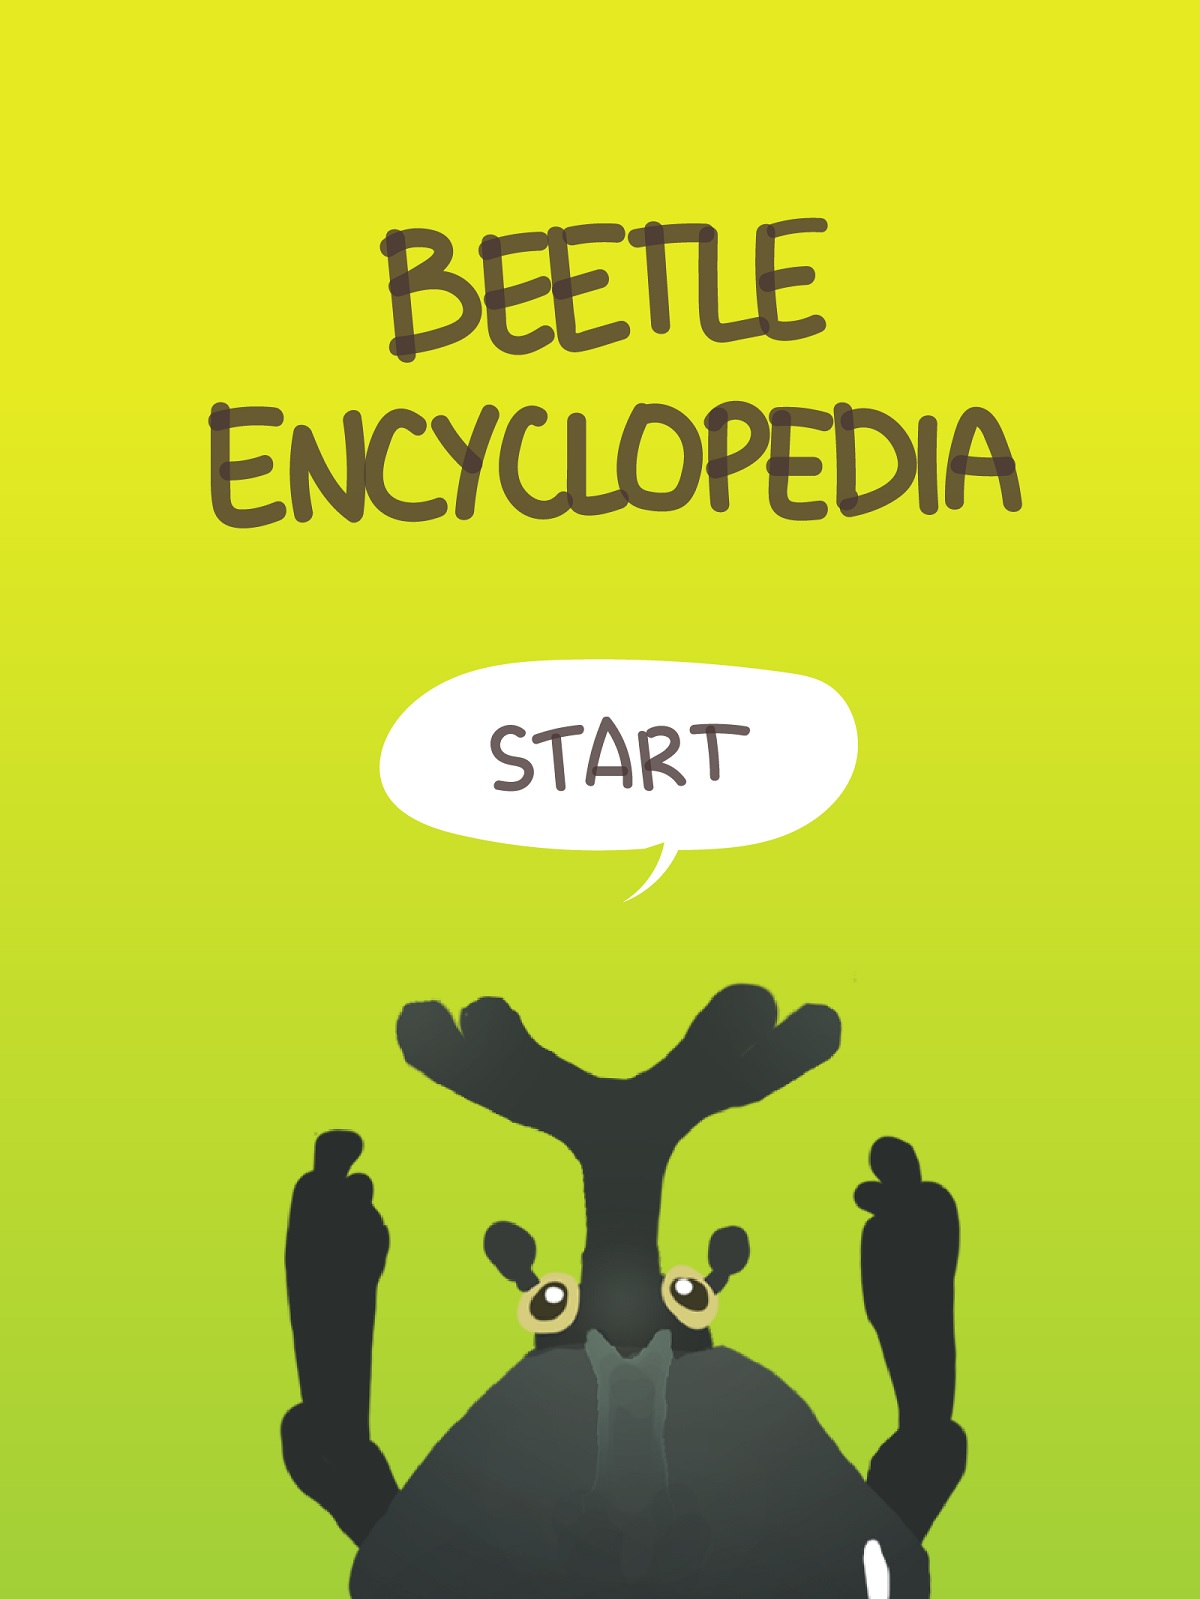 Children Encyclopedia of Beetles 01